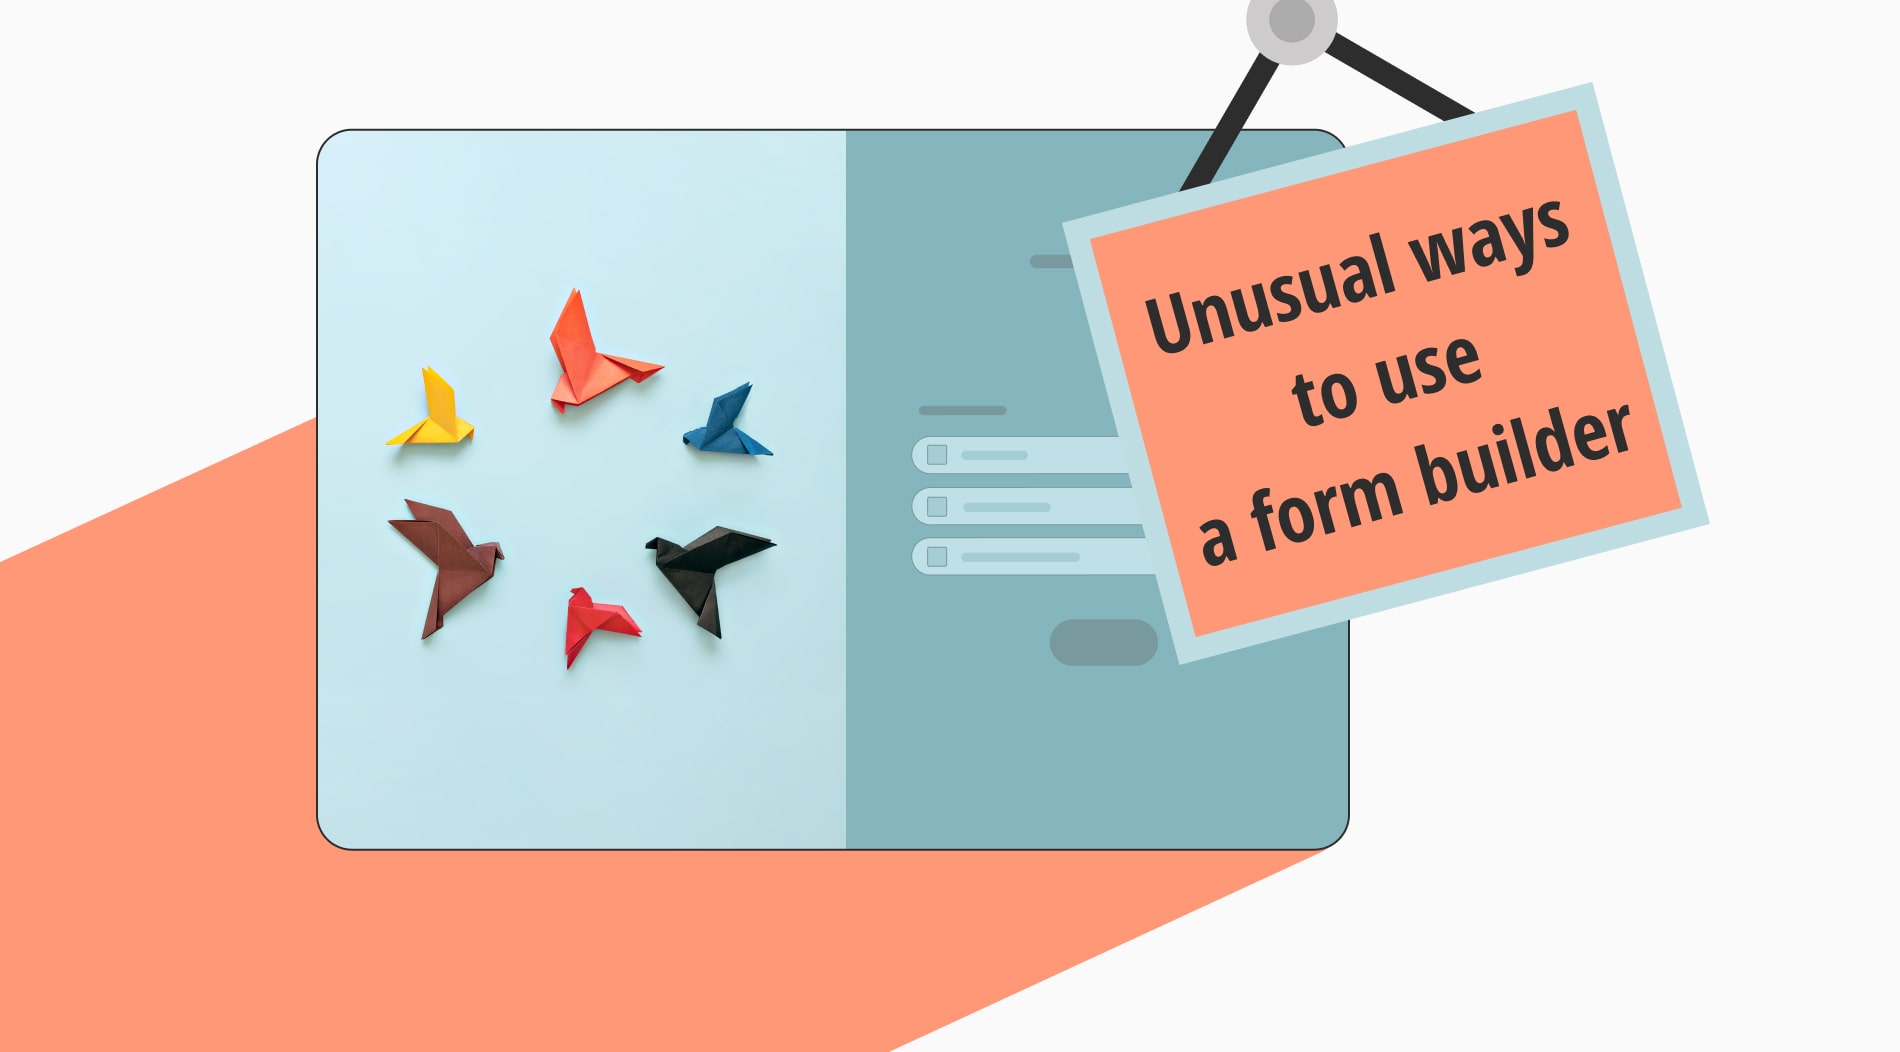 10 unusual ways to use a web-based form creator